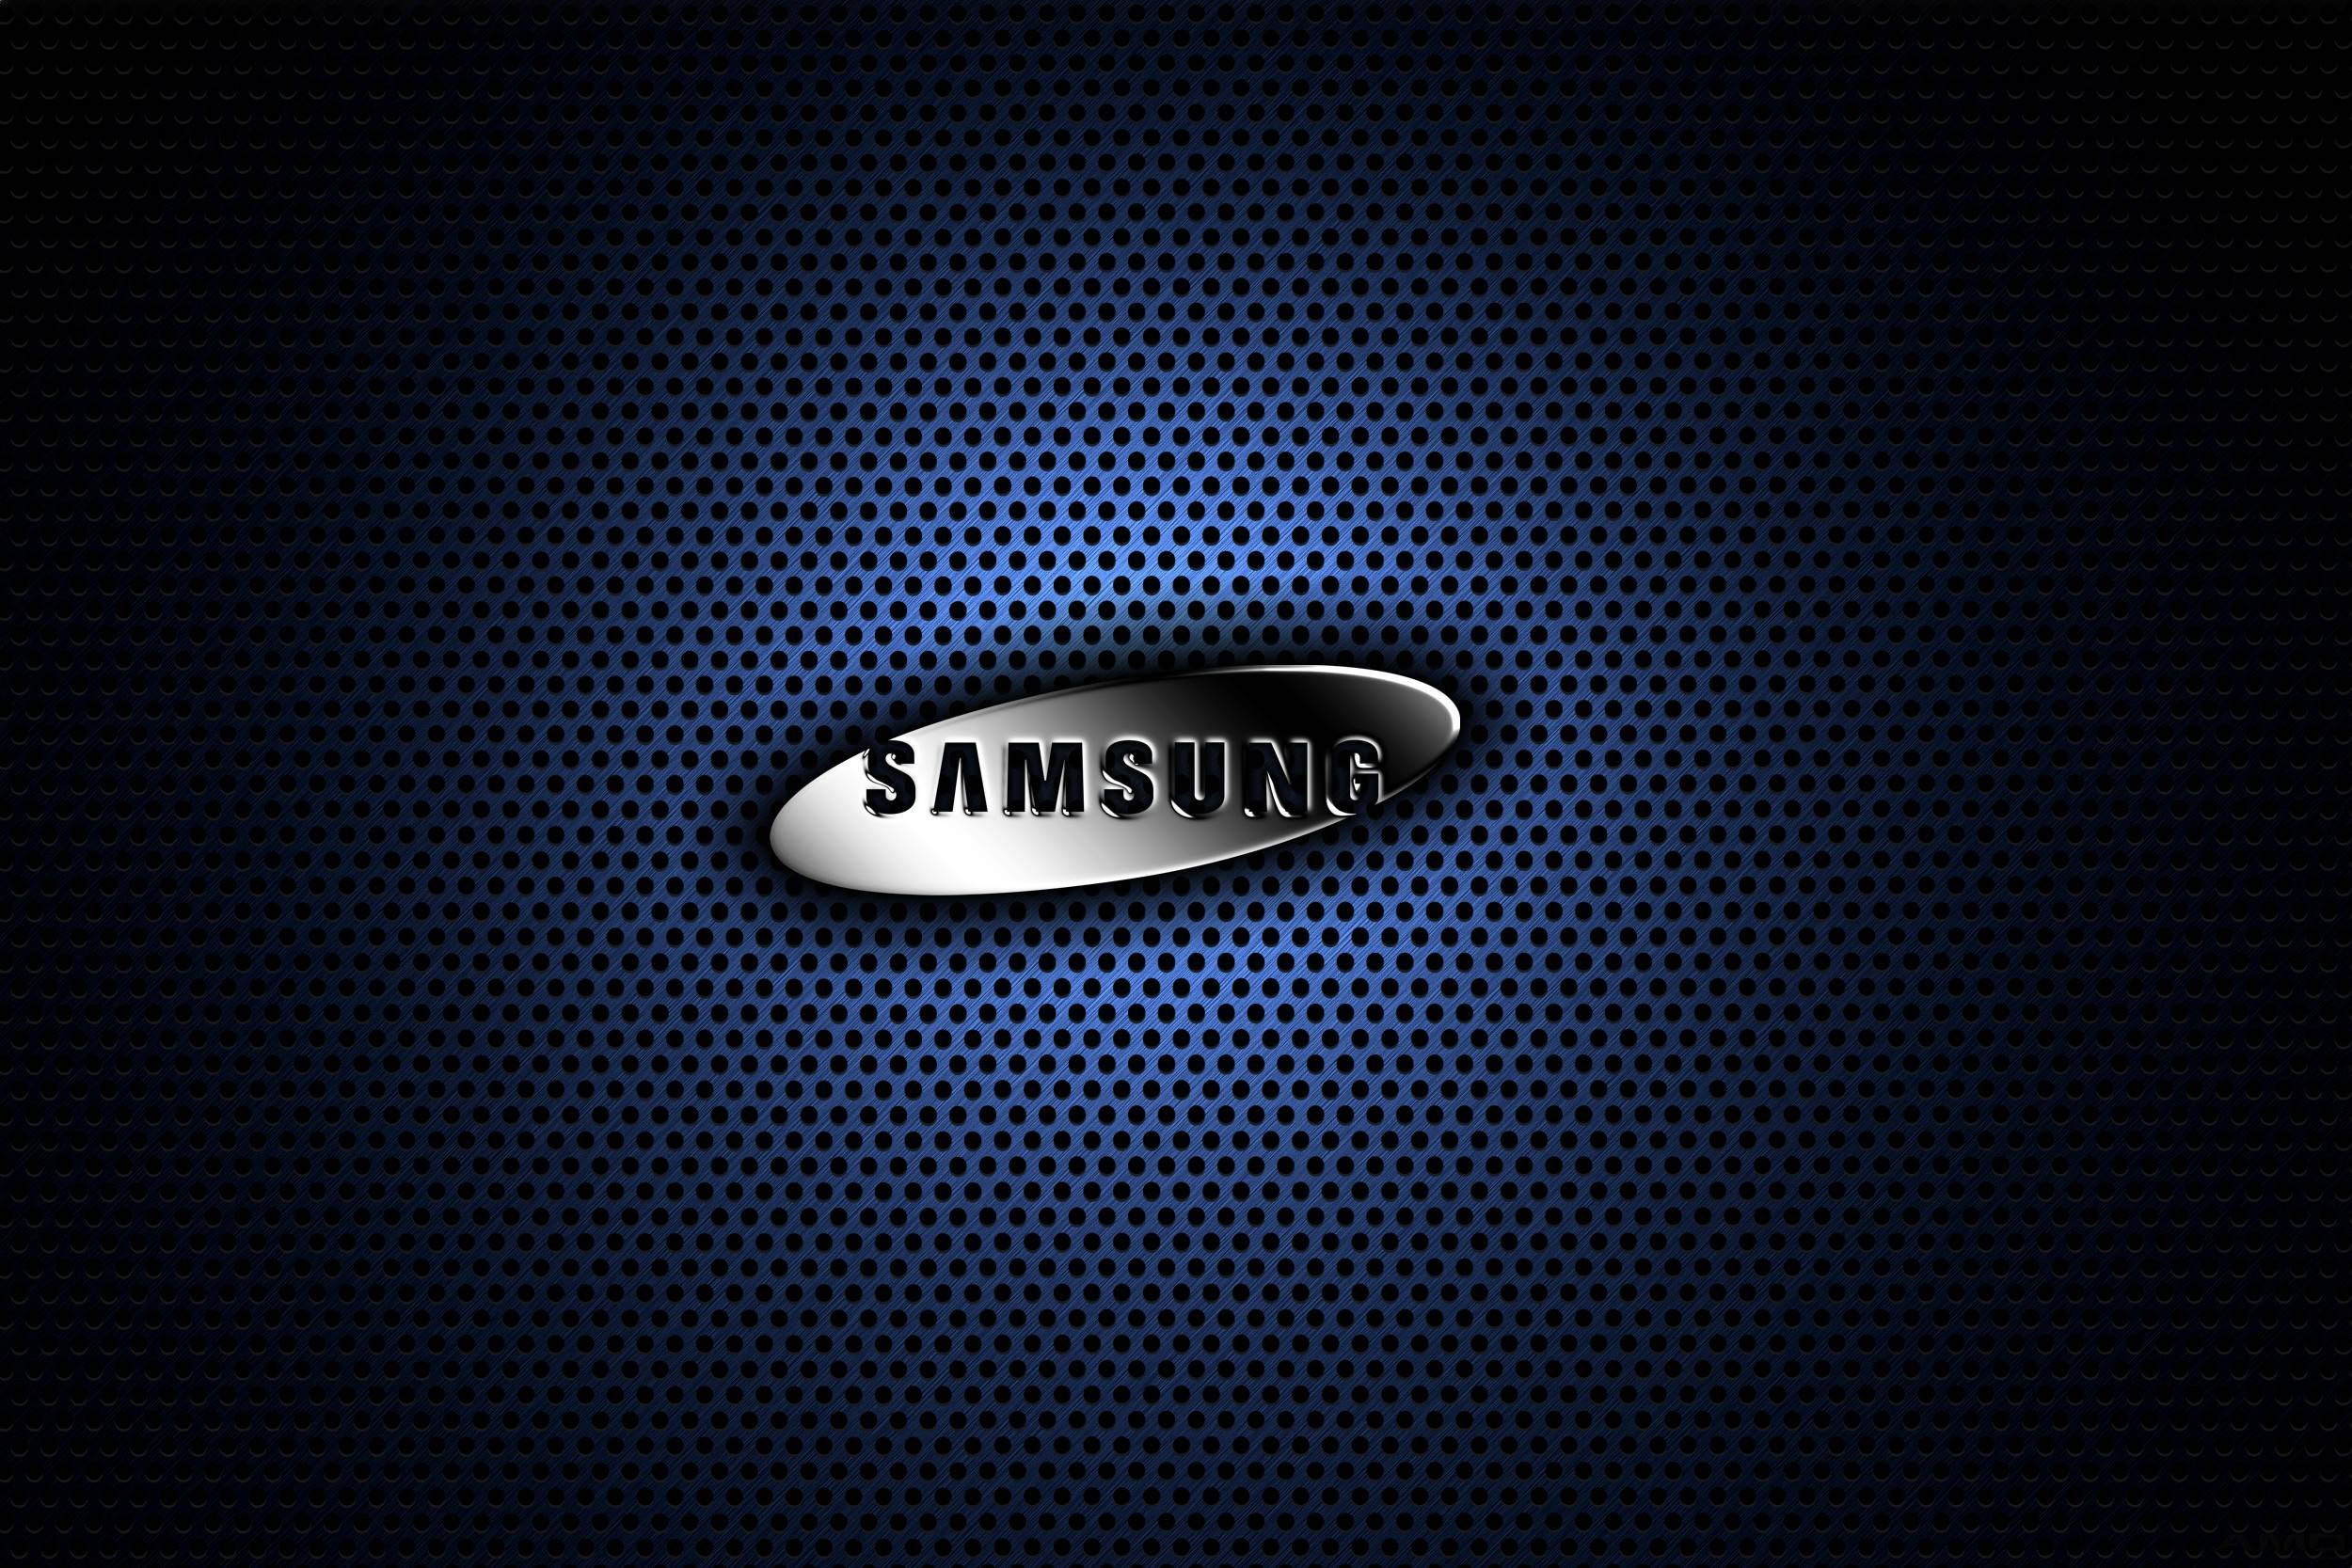 Samsung logo wallpaper Wide or HD